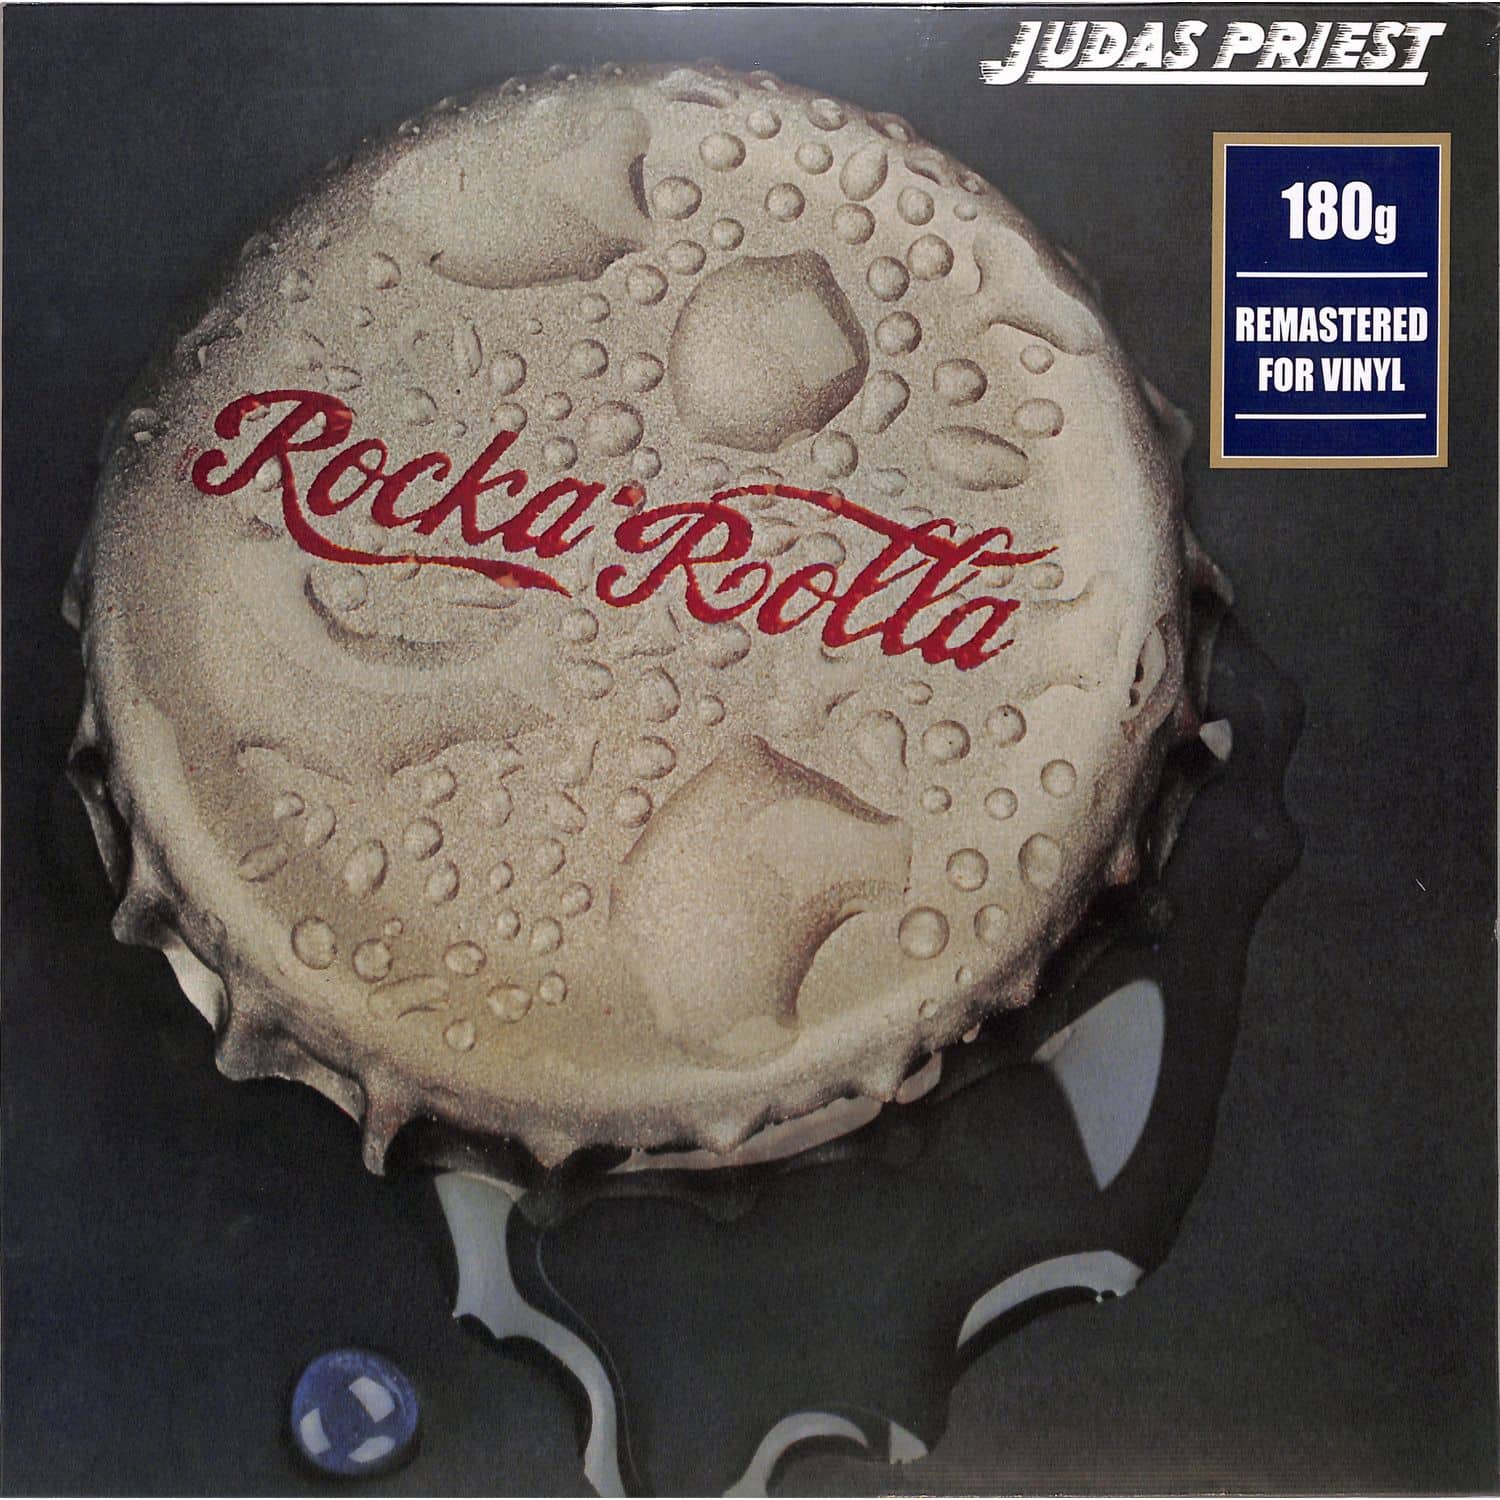 Judas Priest - ROCKA ROLLA 